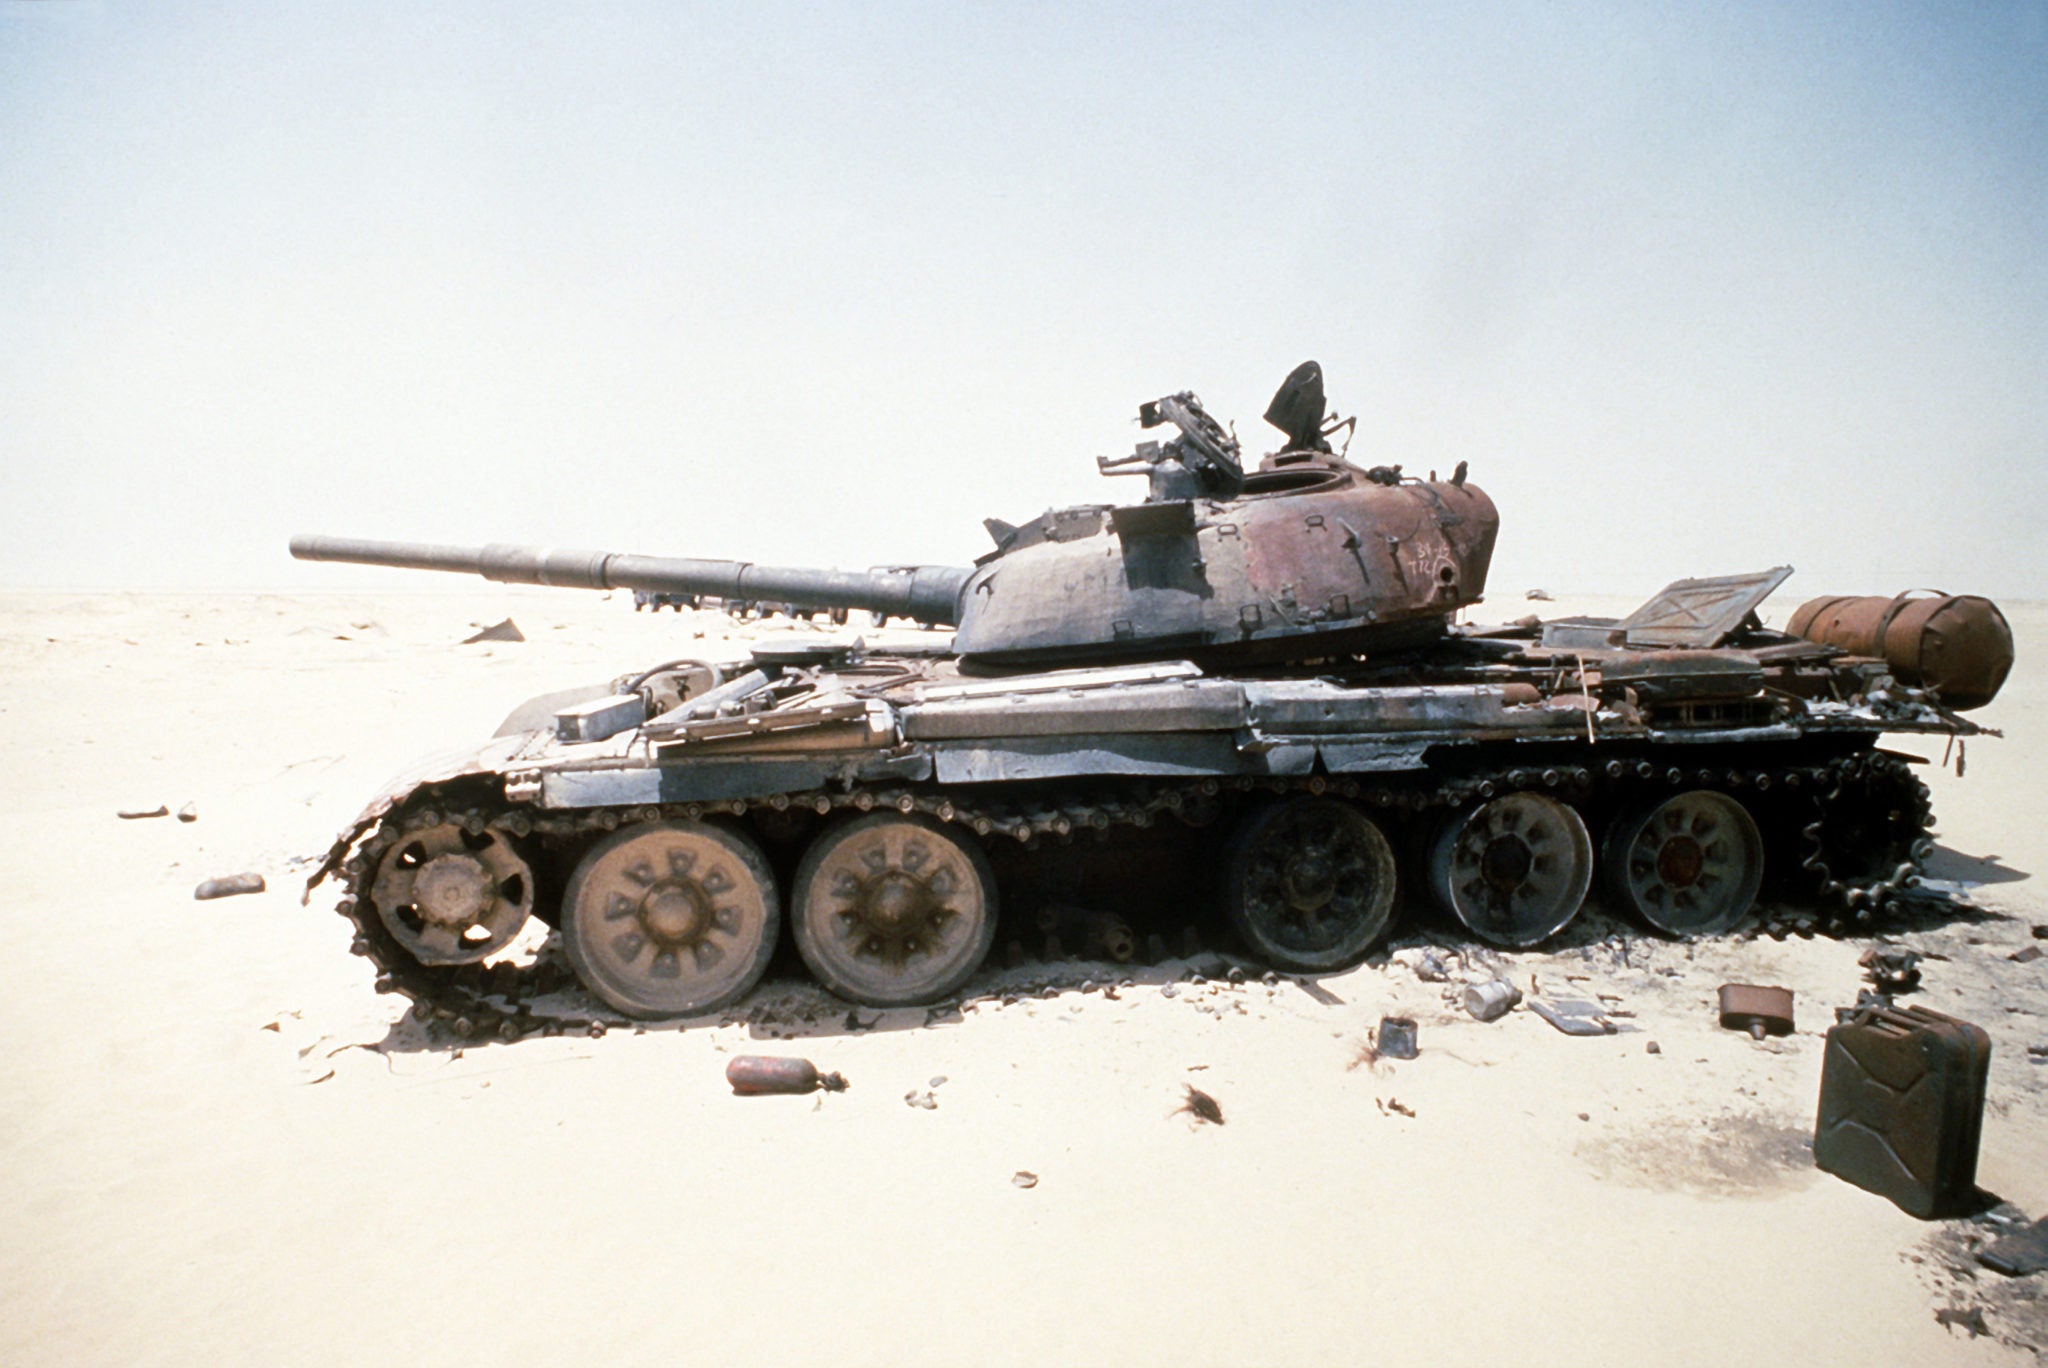 A destroyed Iraqi T-72 main battle tank